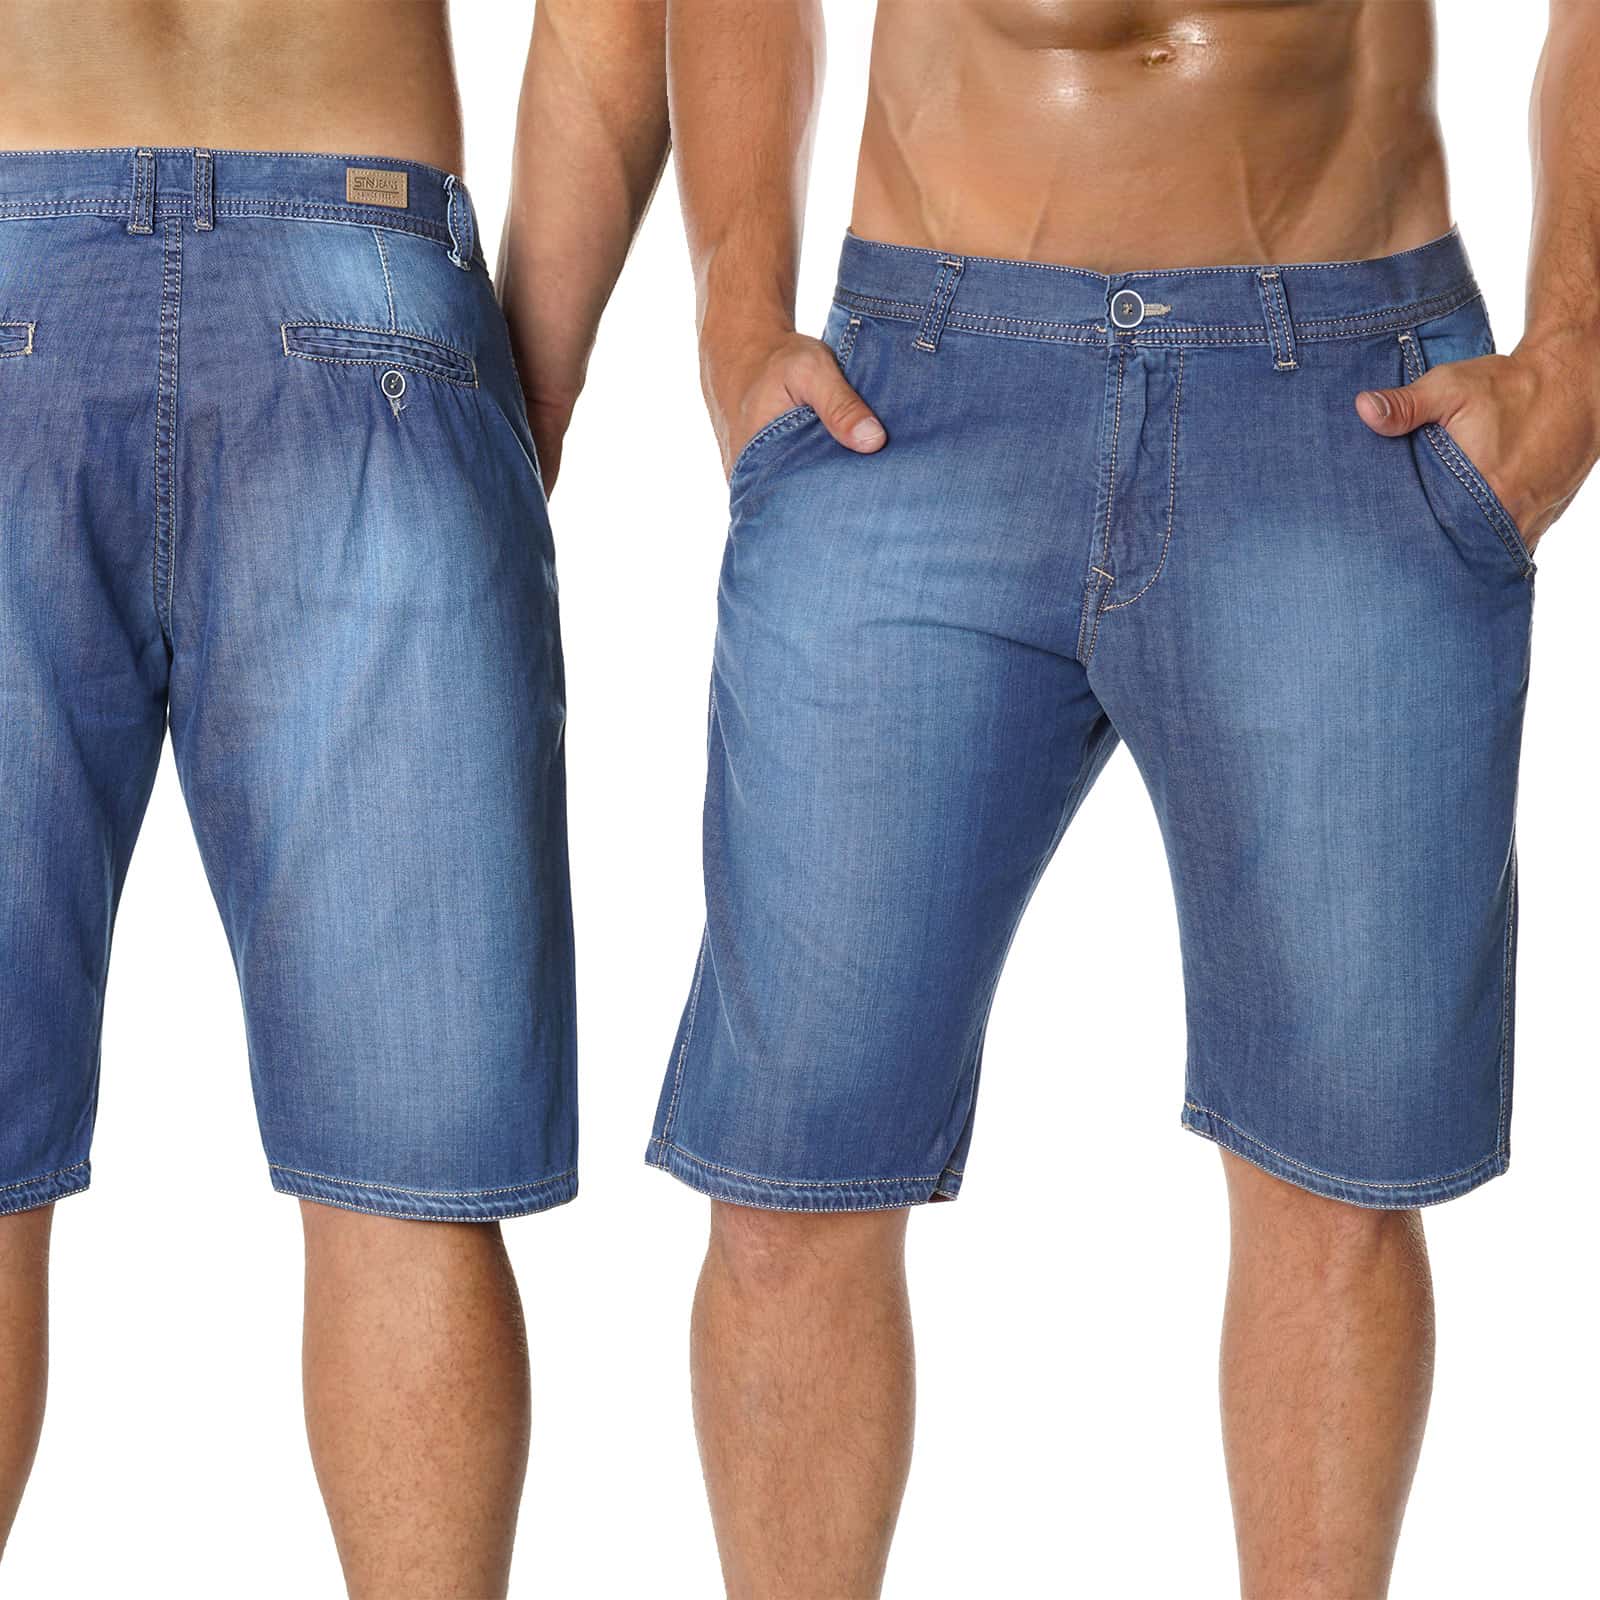 Pbezler Herren Jeans Shorts 012